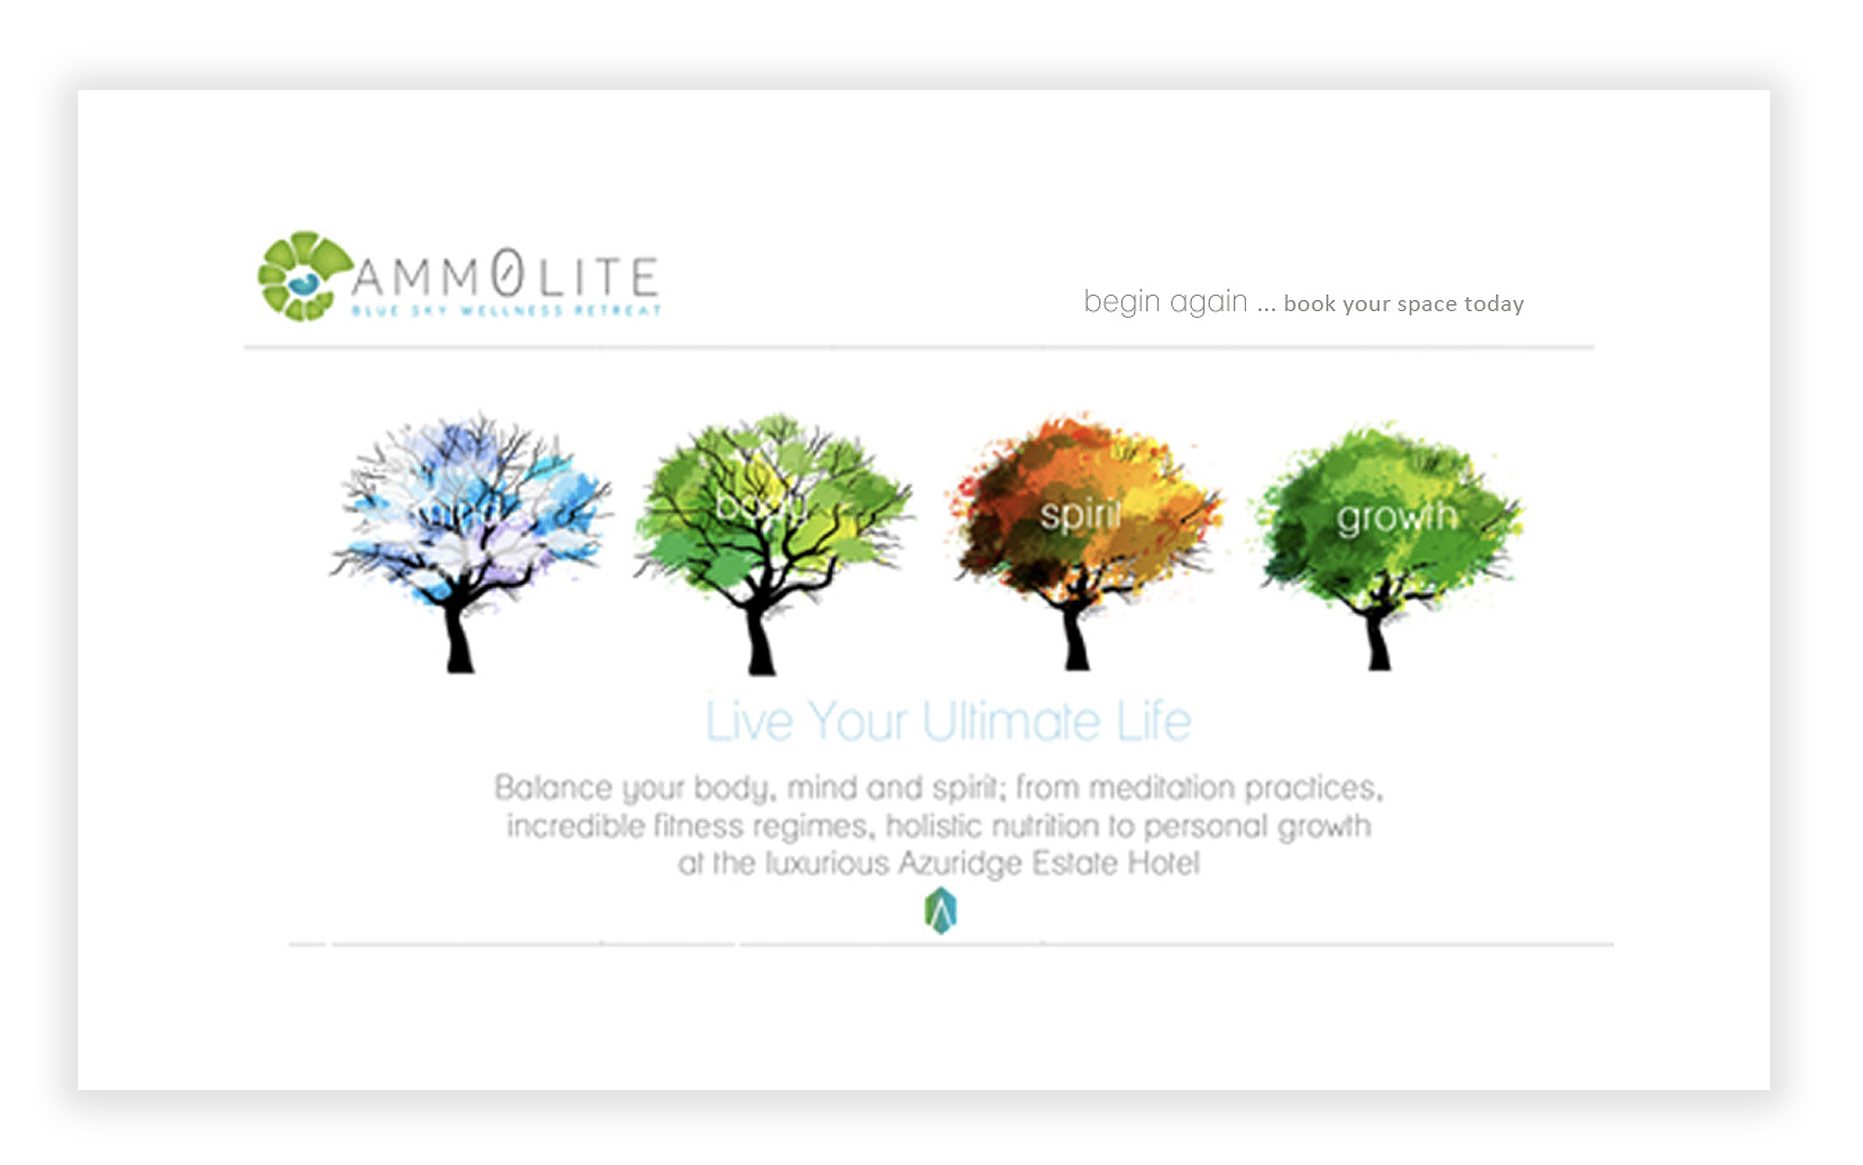 Oliver-Spence-Creative-Client-Ammolite-Graphic-Design-3